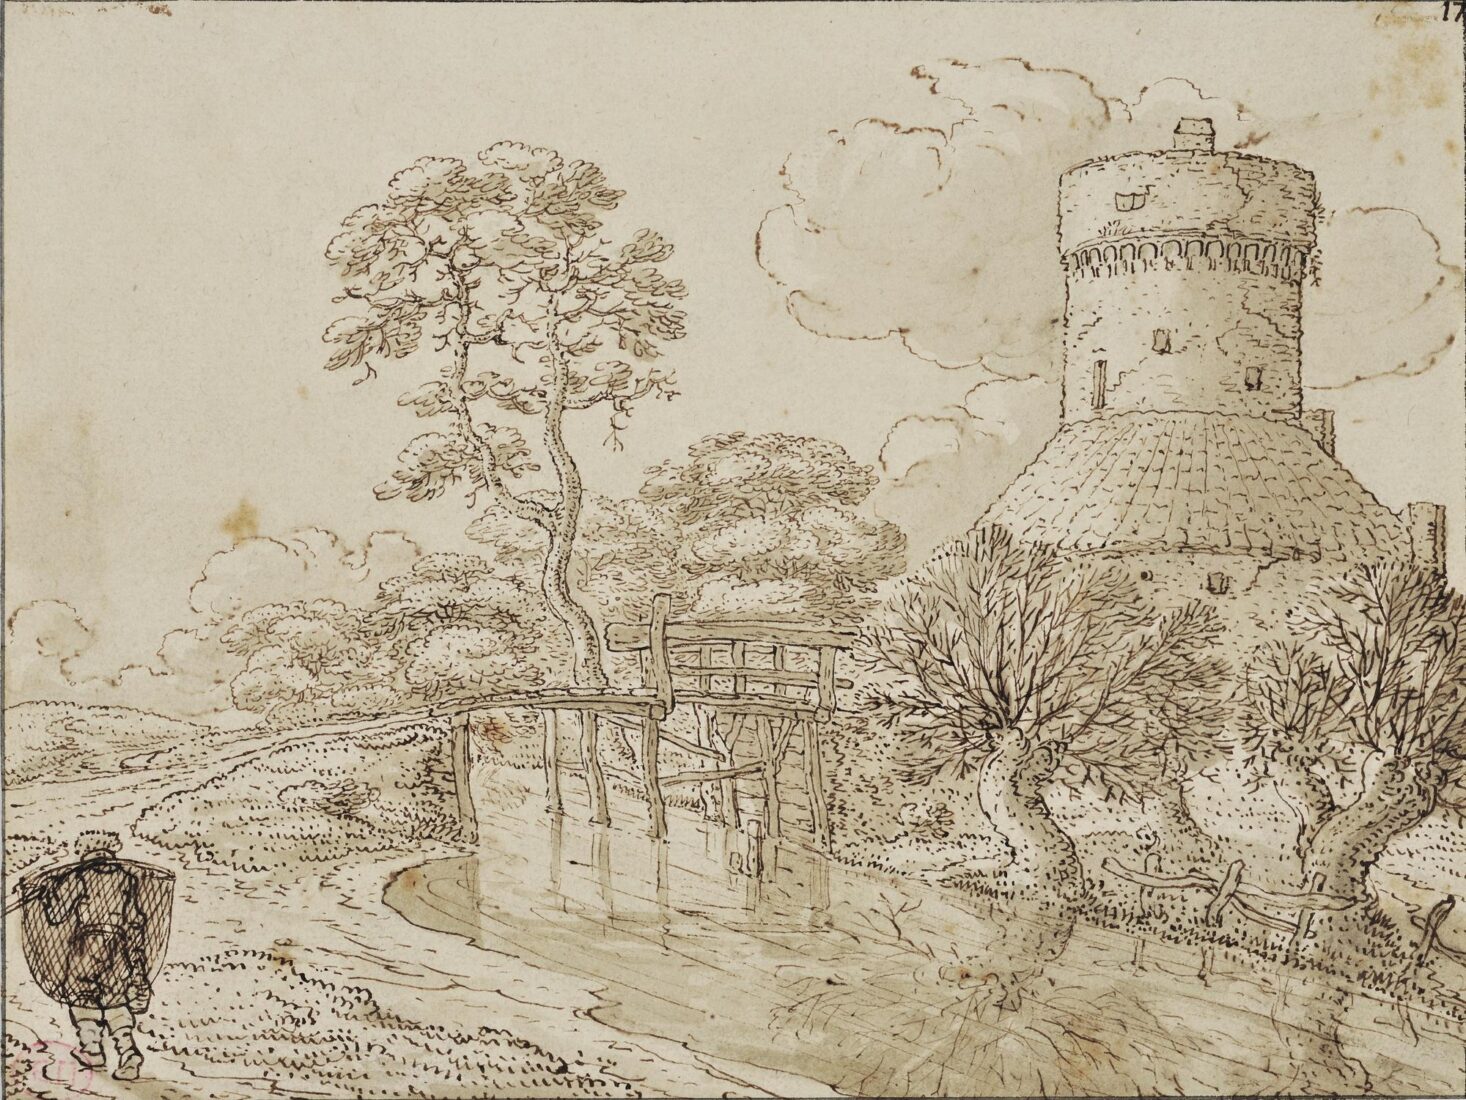 Landscape with Ruined Windmill - Uyl Jansz. den